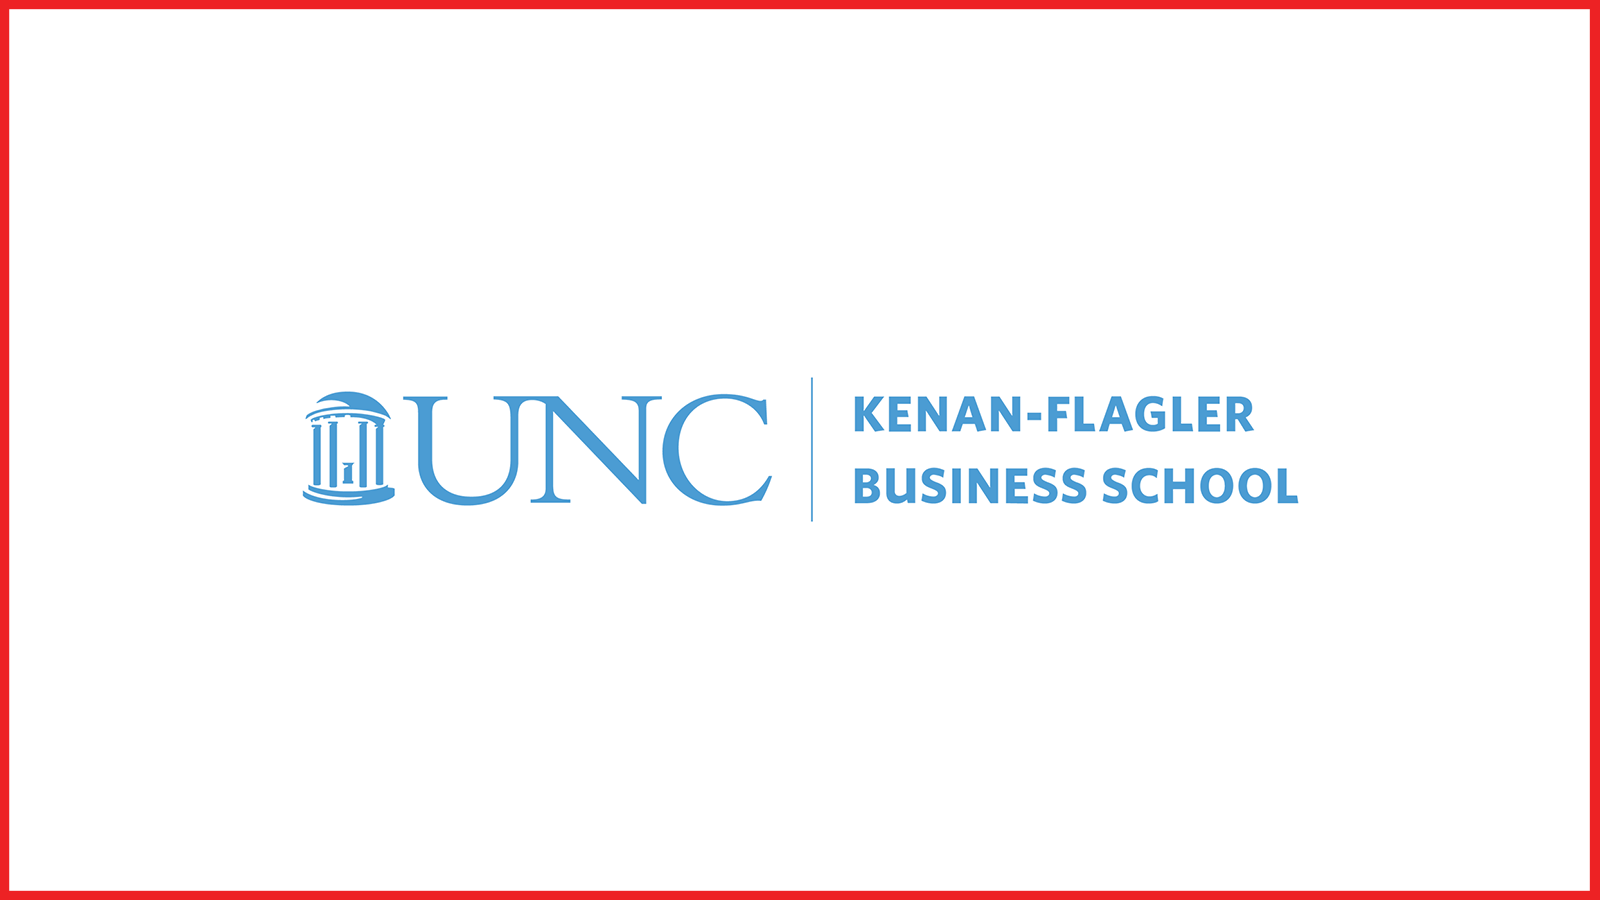 unc kenan-flagler business school logo with red border